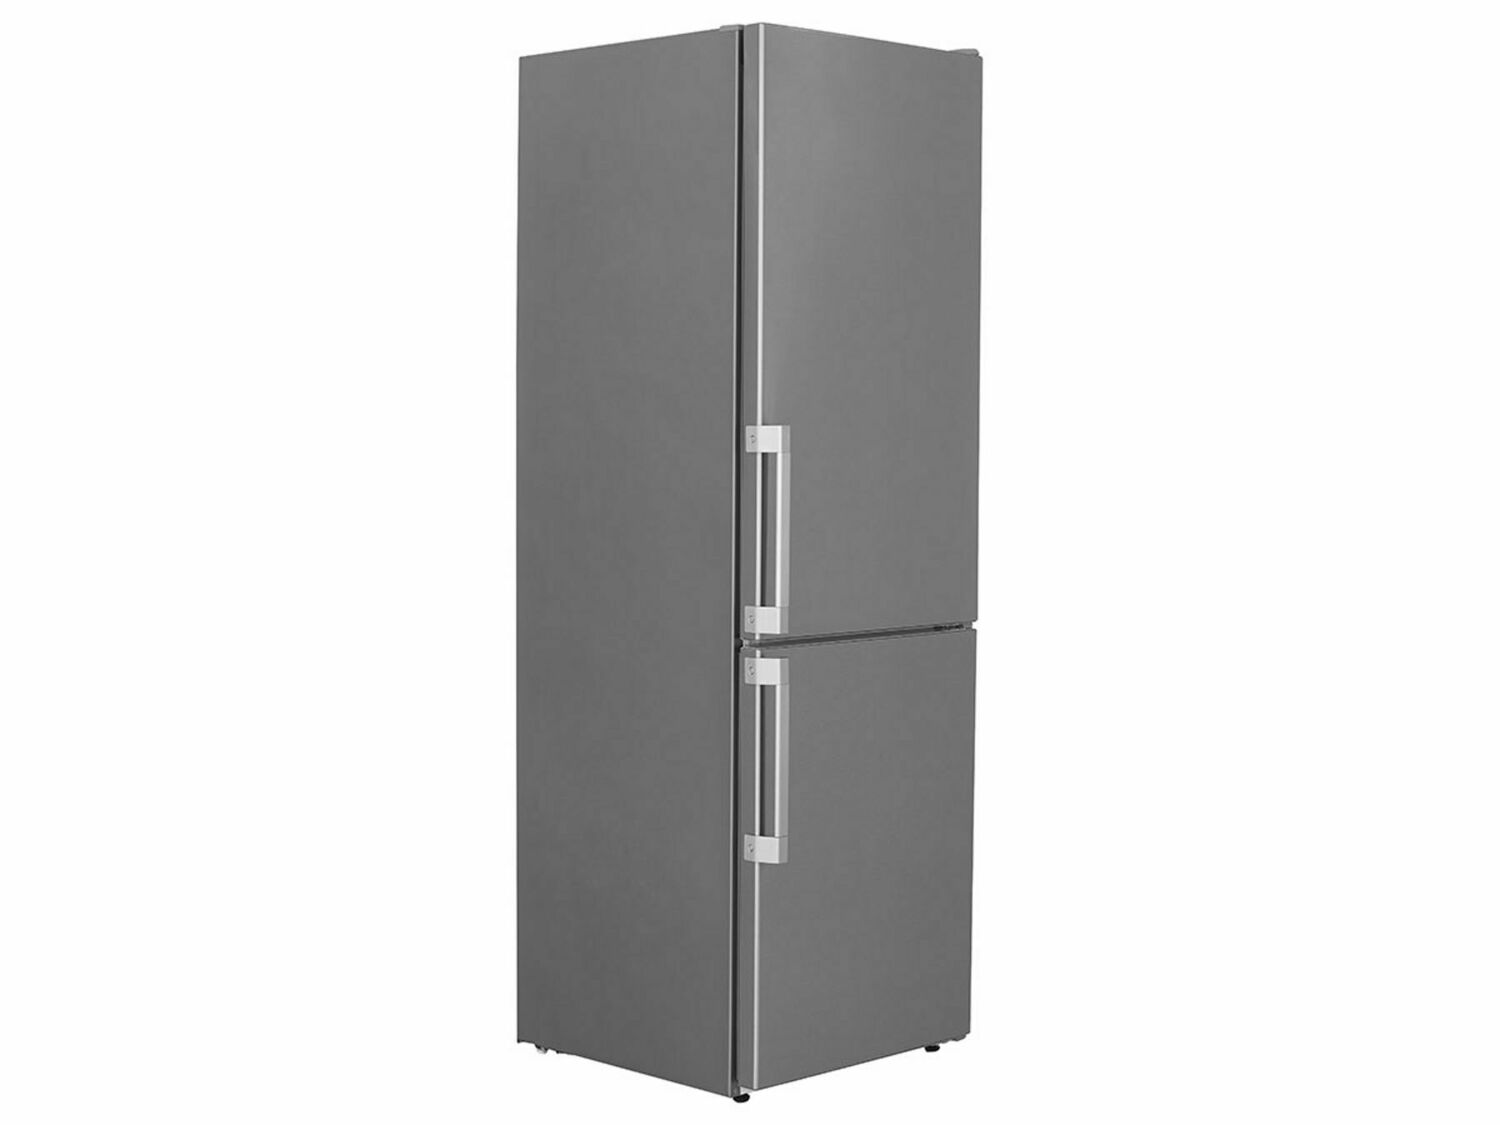 Bottom-Mount Refrigerator 24-inches wide - Fingerprint Resistant Stainless Steel